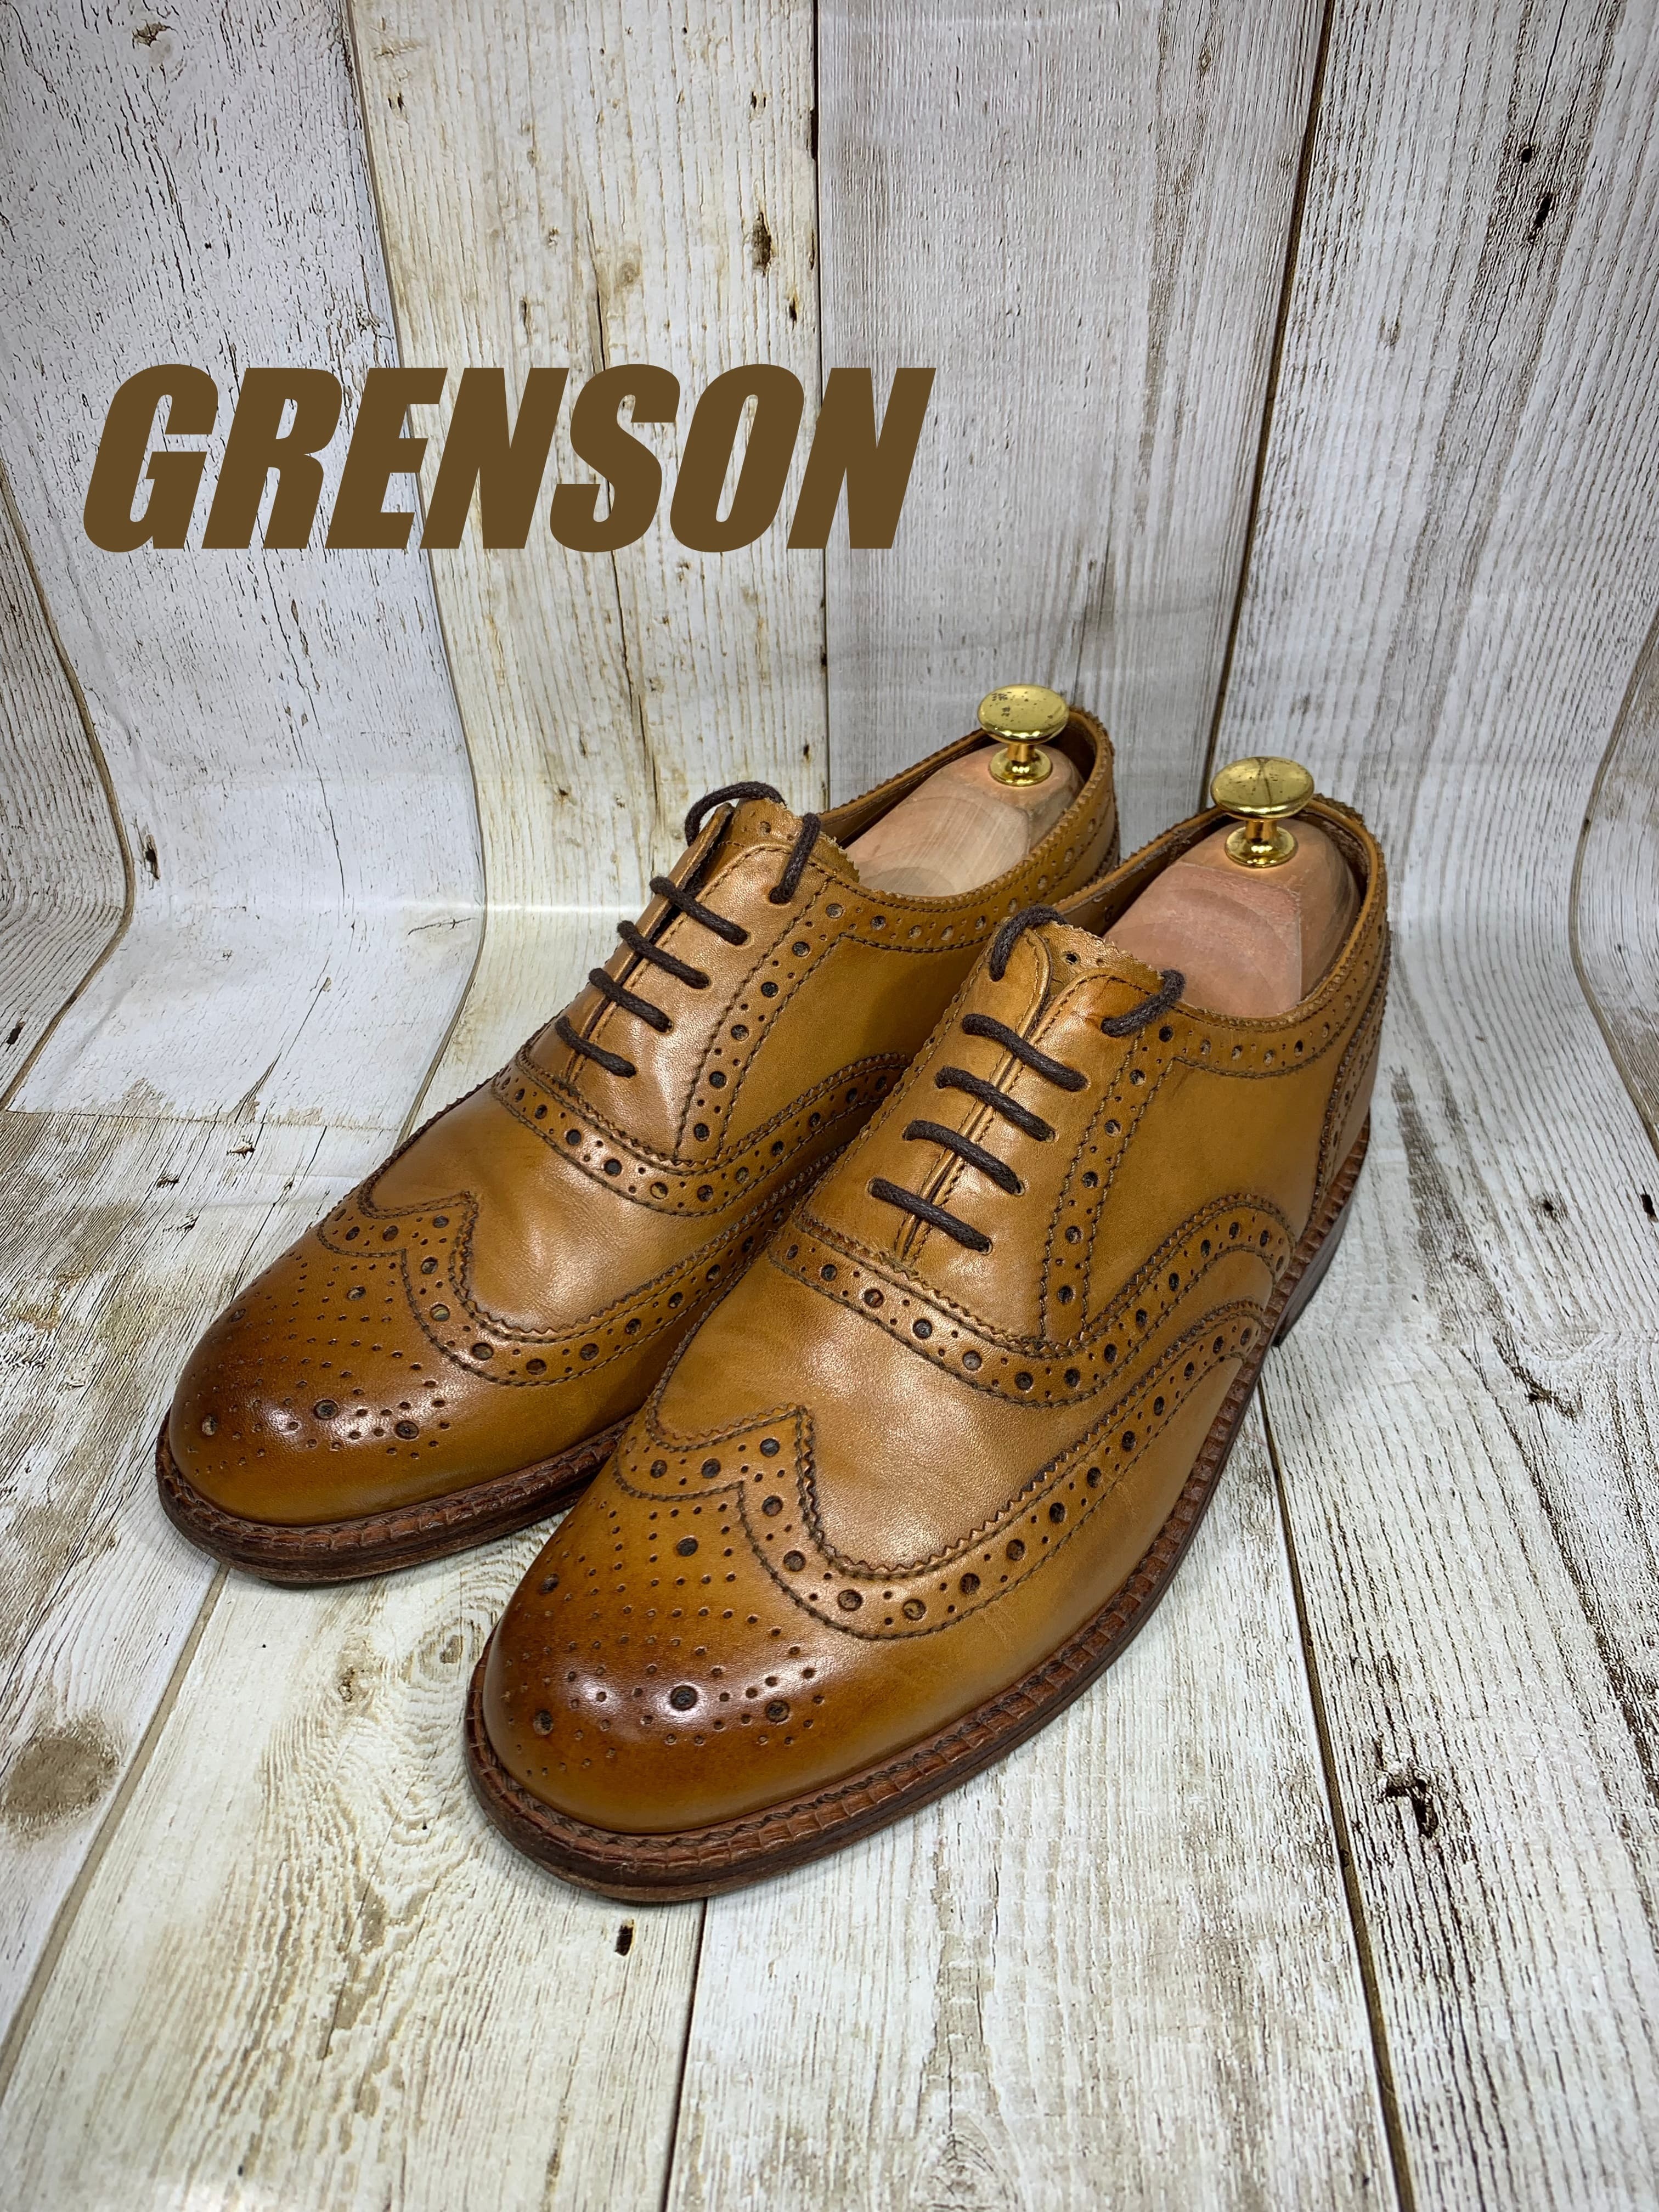 Grenson グレンソン フルブローグ UK6H 25cm | 中古靴・革靴・ブーツ通販専門店 DafsMart ダフスマート Online